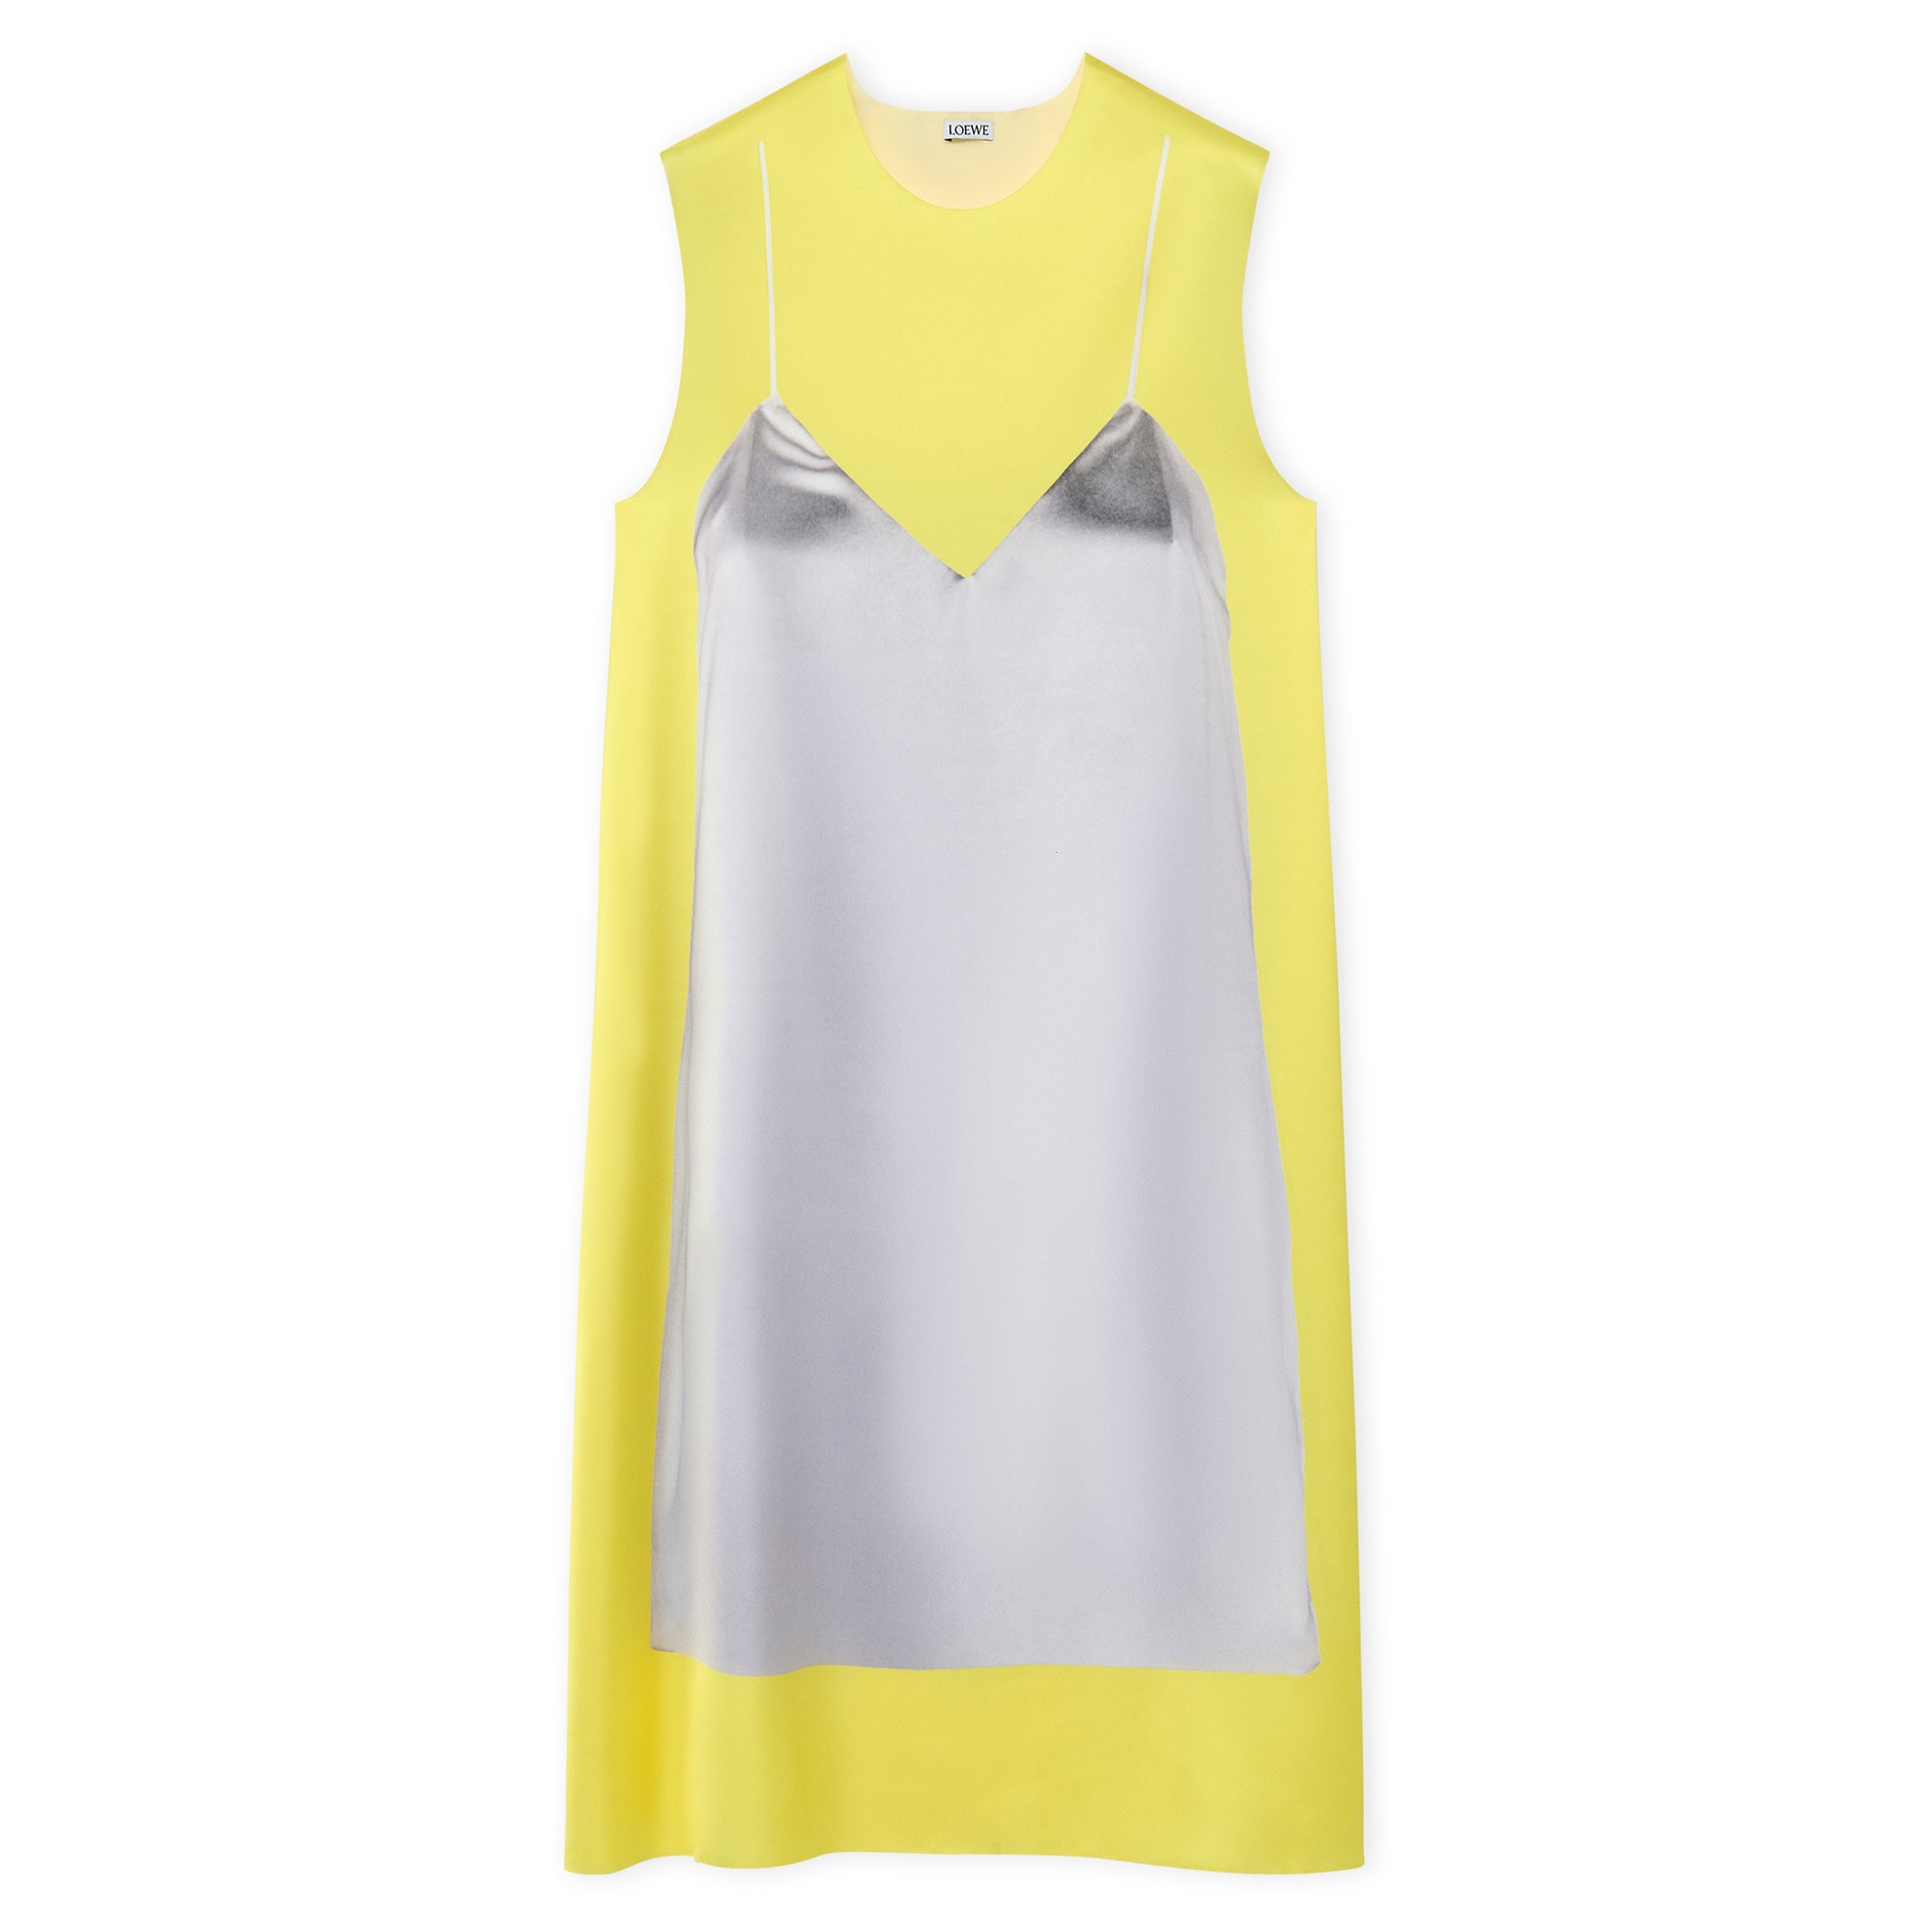 Loewe - Women’s A-Line Dress - (Yellow/Grey) view 1